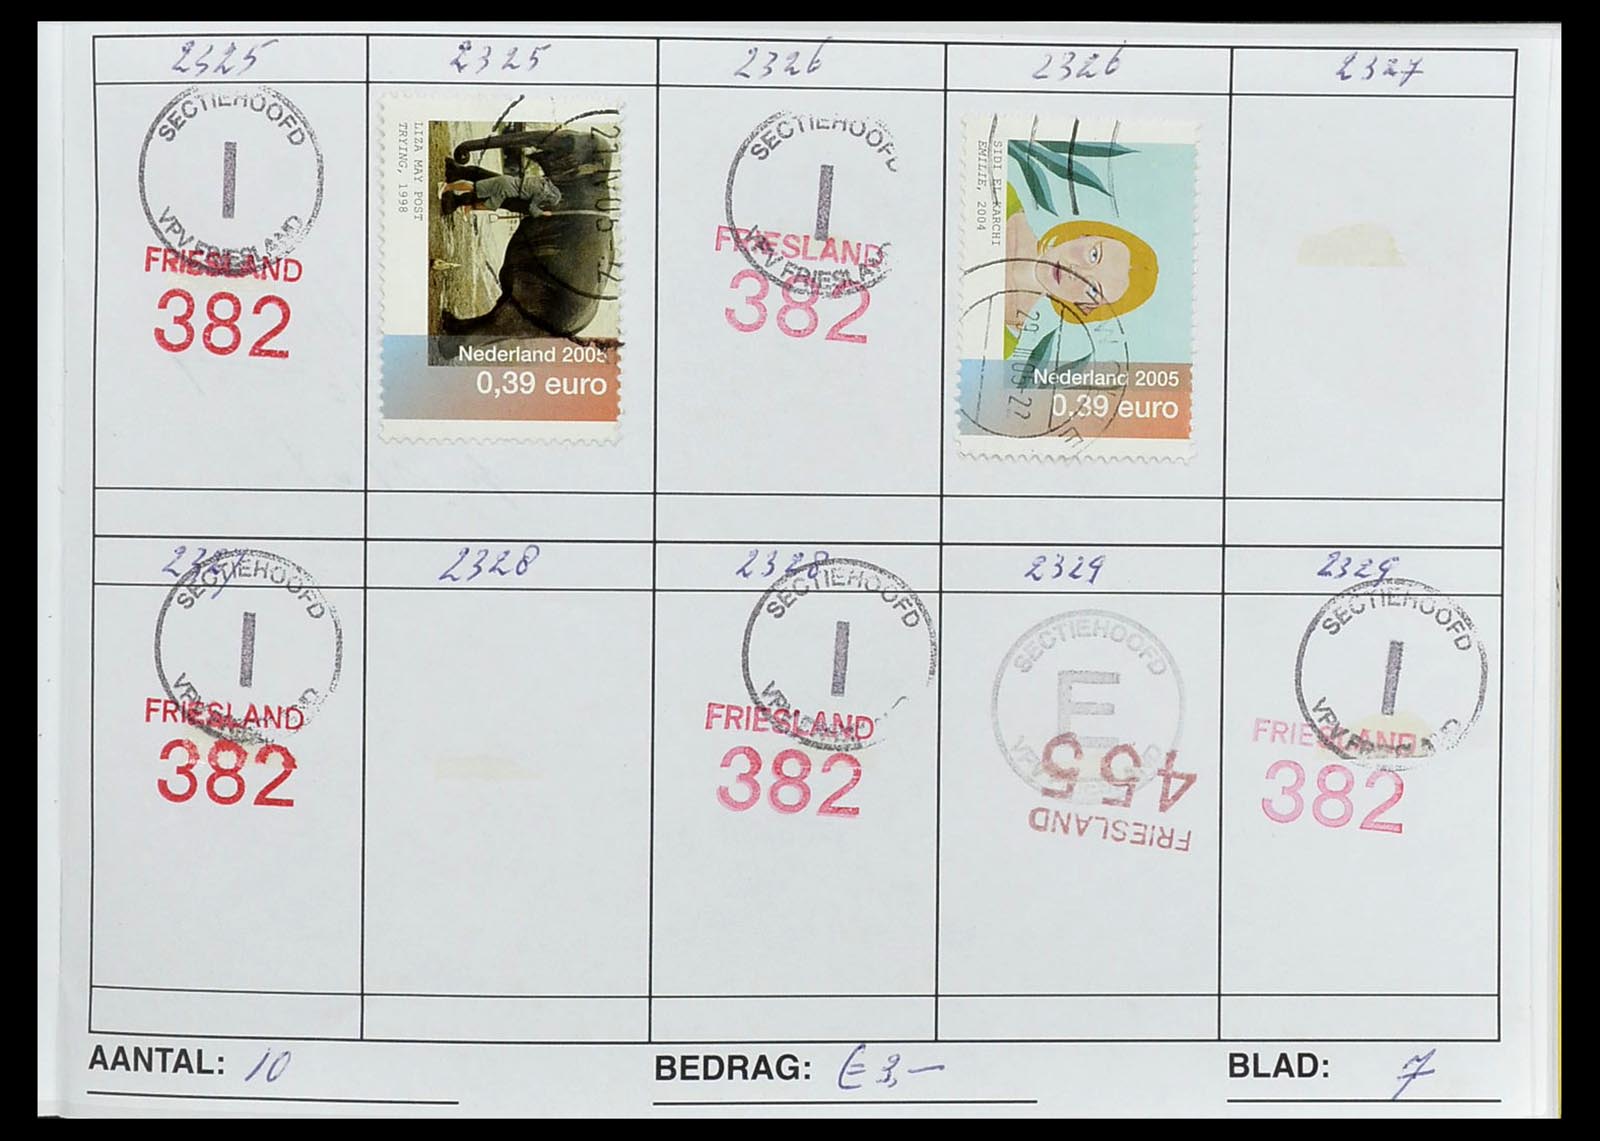 34612 0040 - Stamp Collection 34612 Wereld rondzendboekjes.